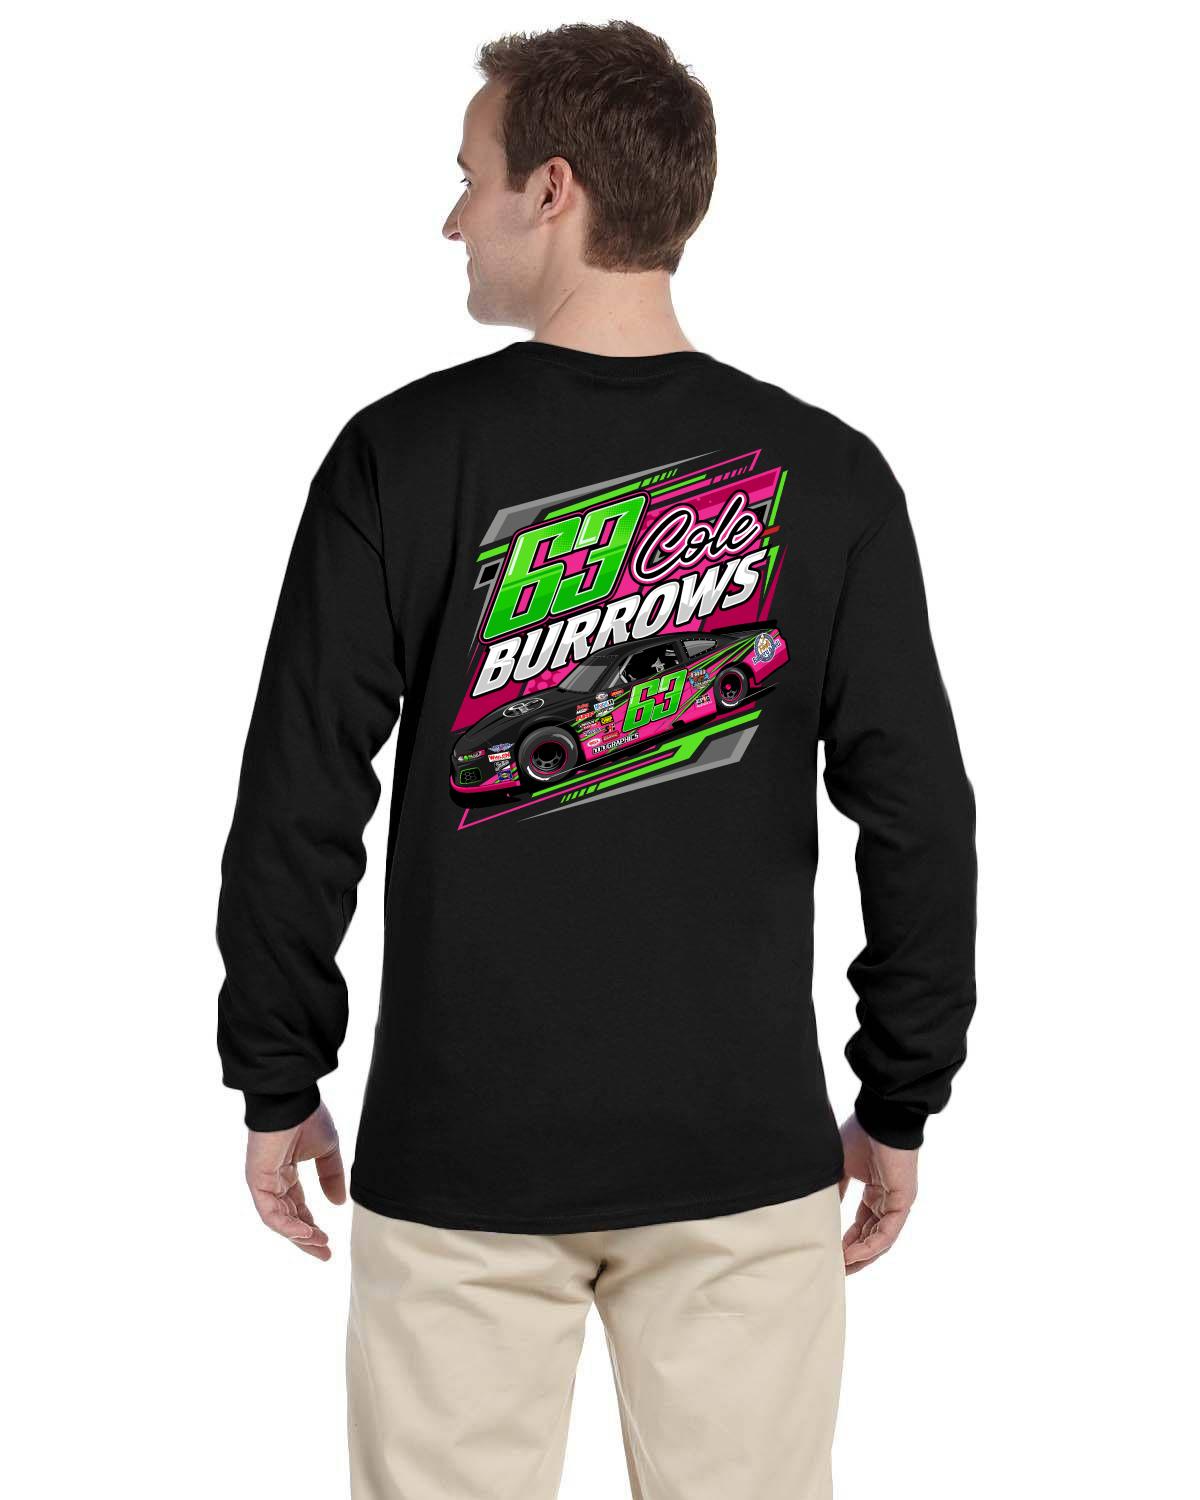 Cole Burrows Racing adult Long-Sleeve T-Shirt